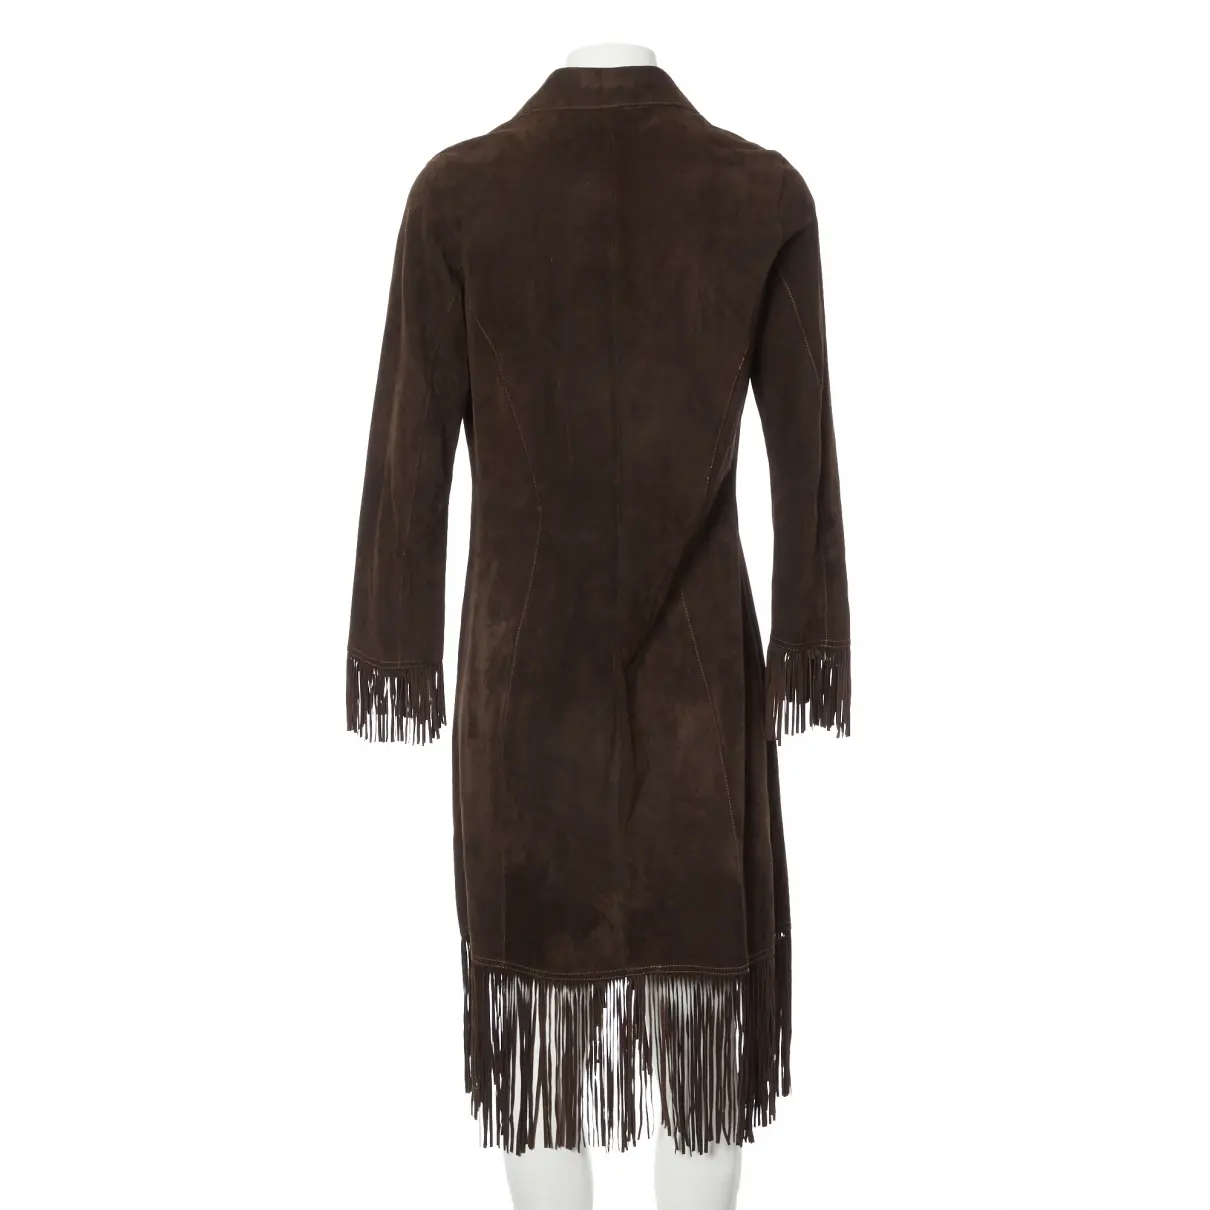 Buy Oakwood Leather coat online